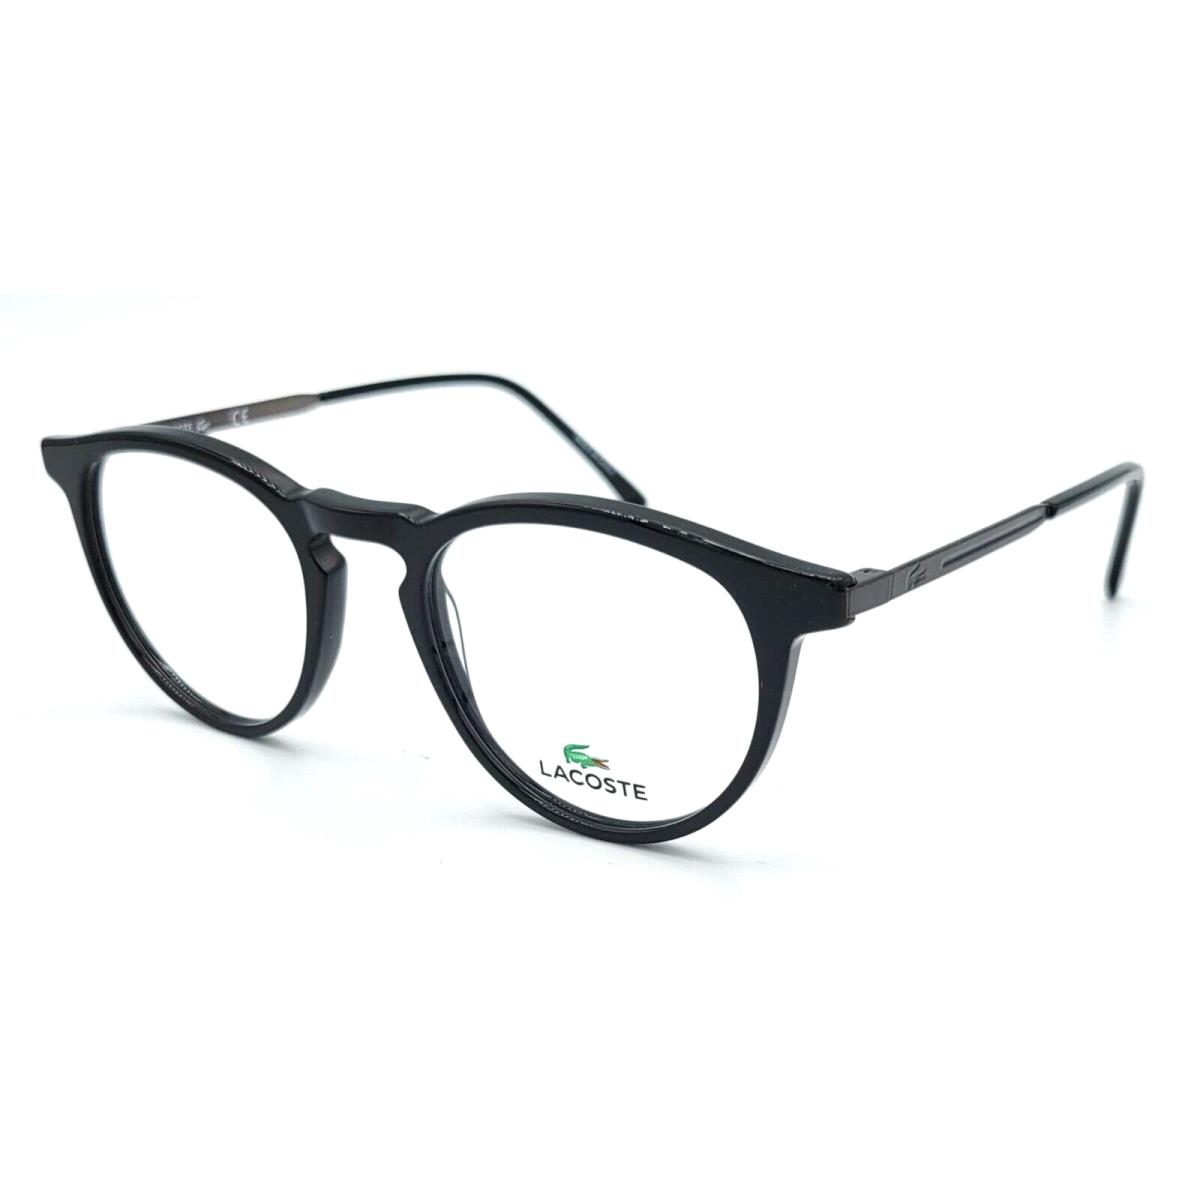 Lacoste - L2872 001 49/20/145 - Black - Men Eyeglasses - Frame: Black